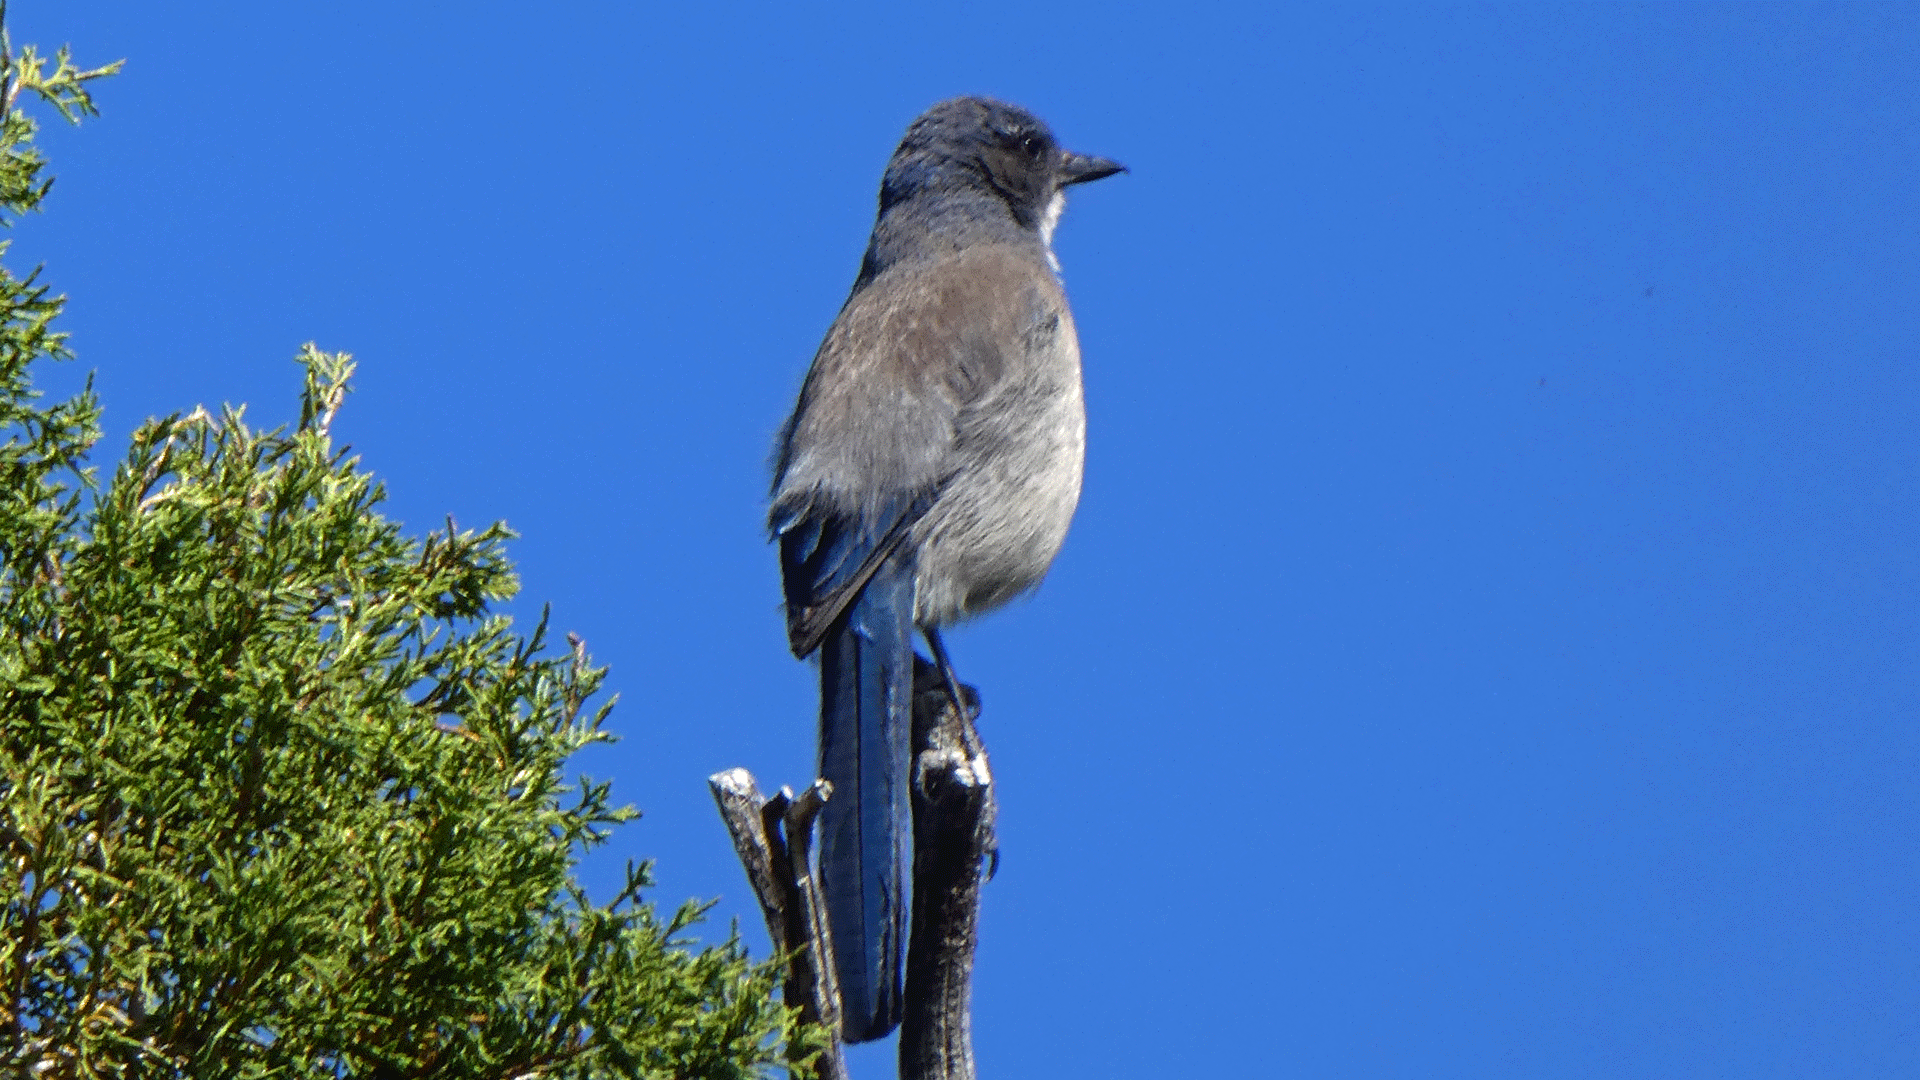 Juvenile, Sandia Mountains, May 2019